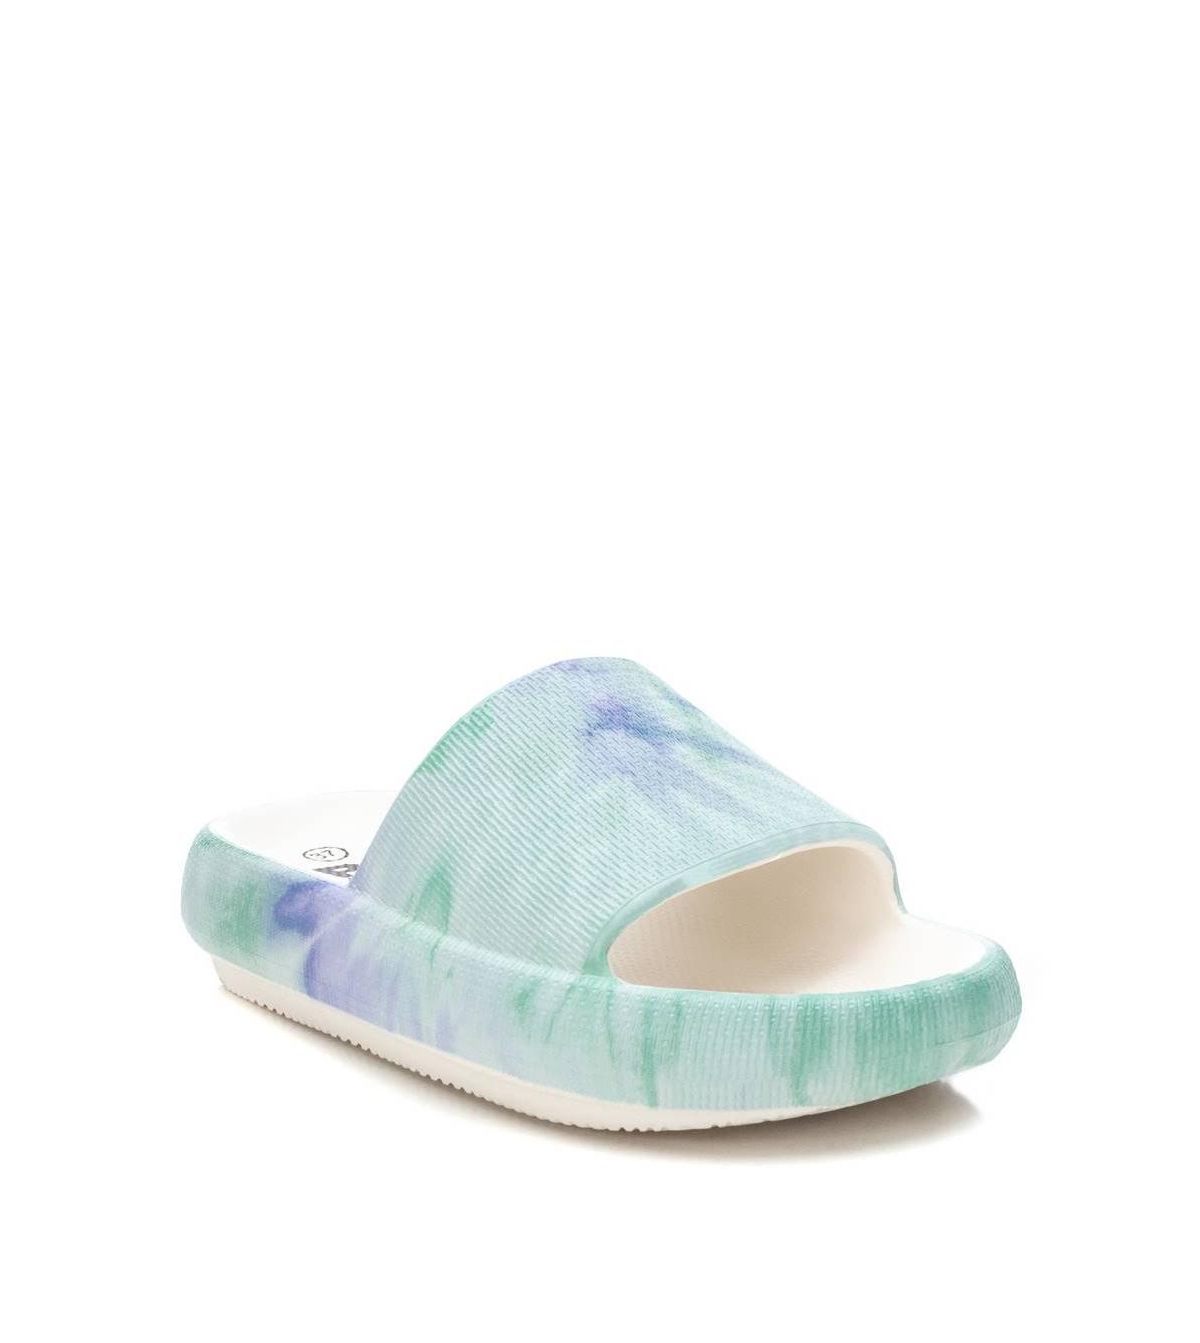 Women's Pool Slides Sandals By Xti - Turquoise/aqua